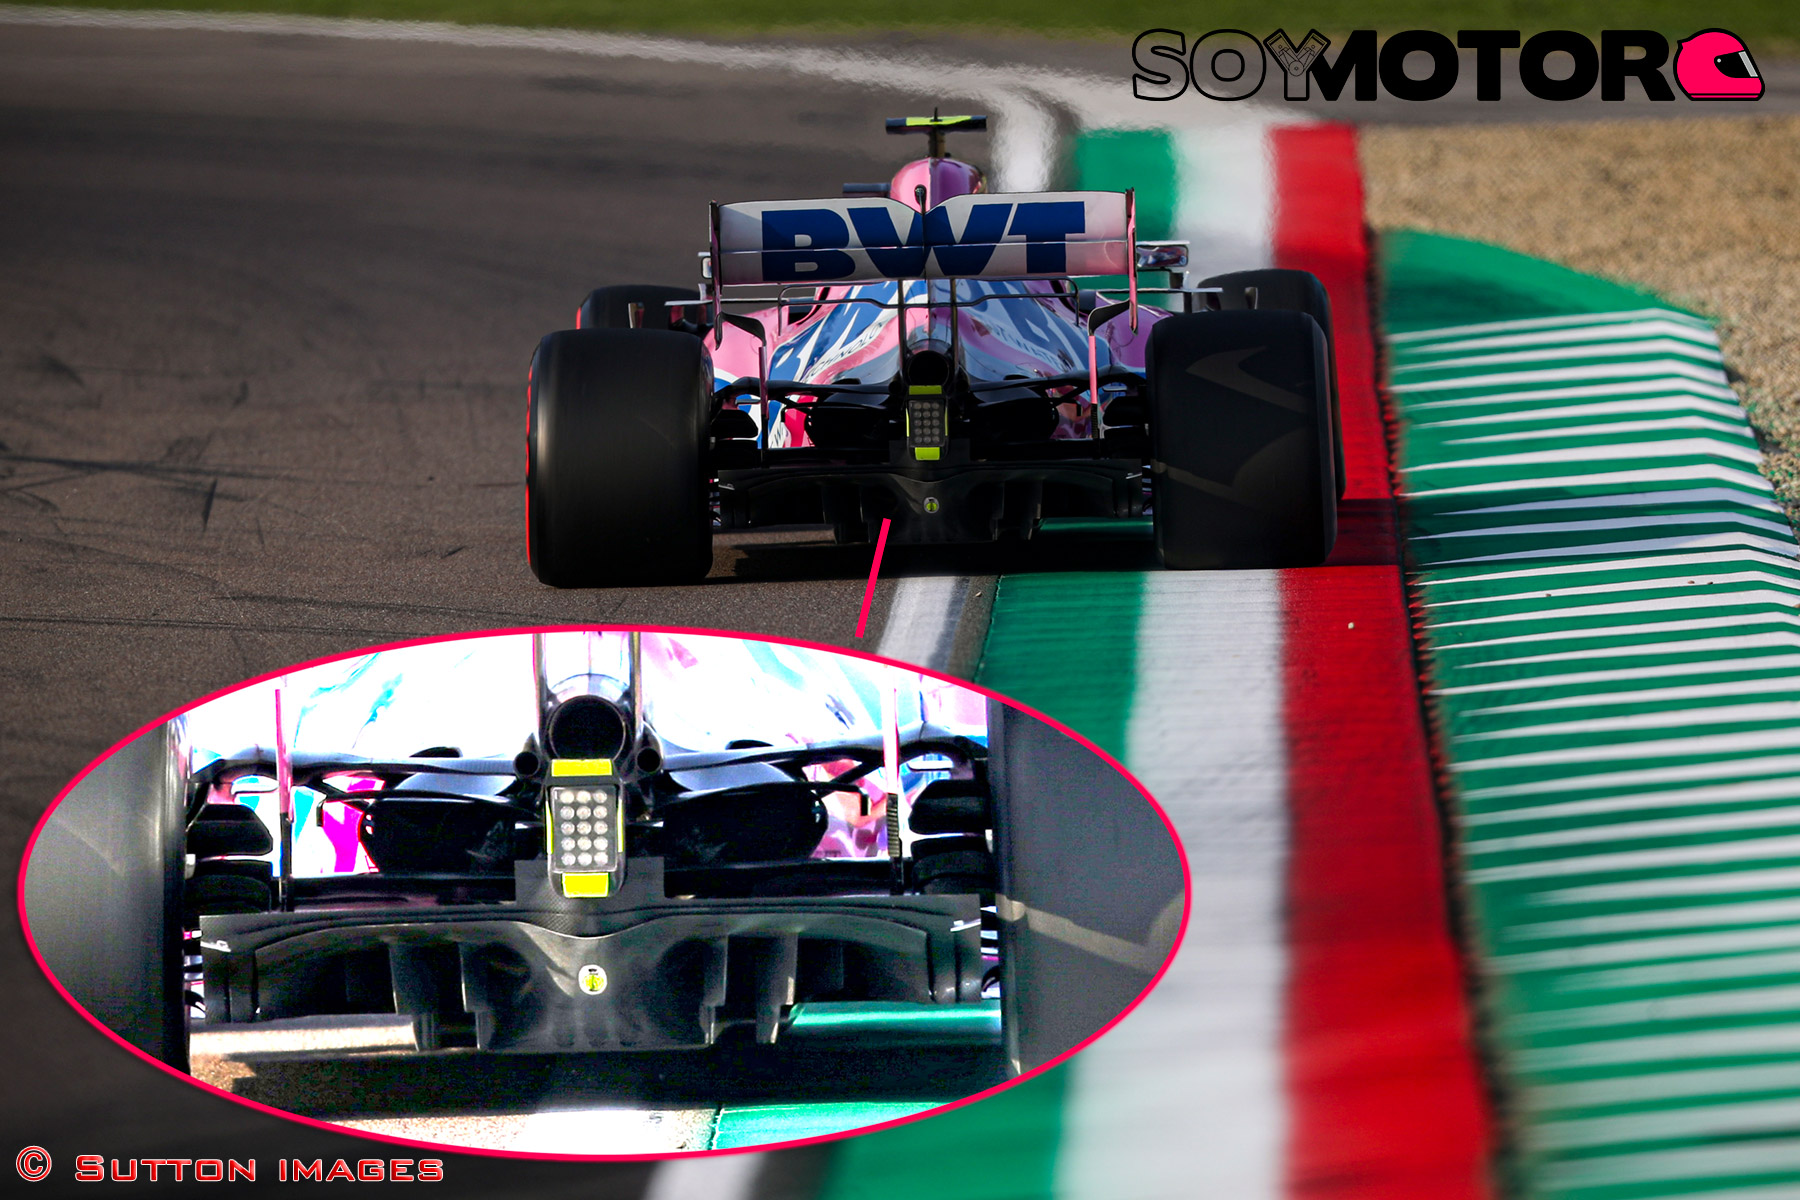 racing-point-soymotor.jpg